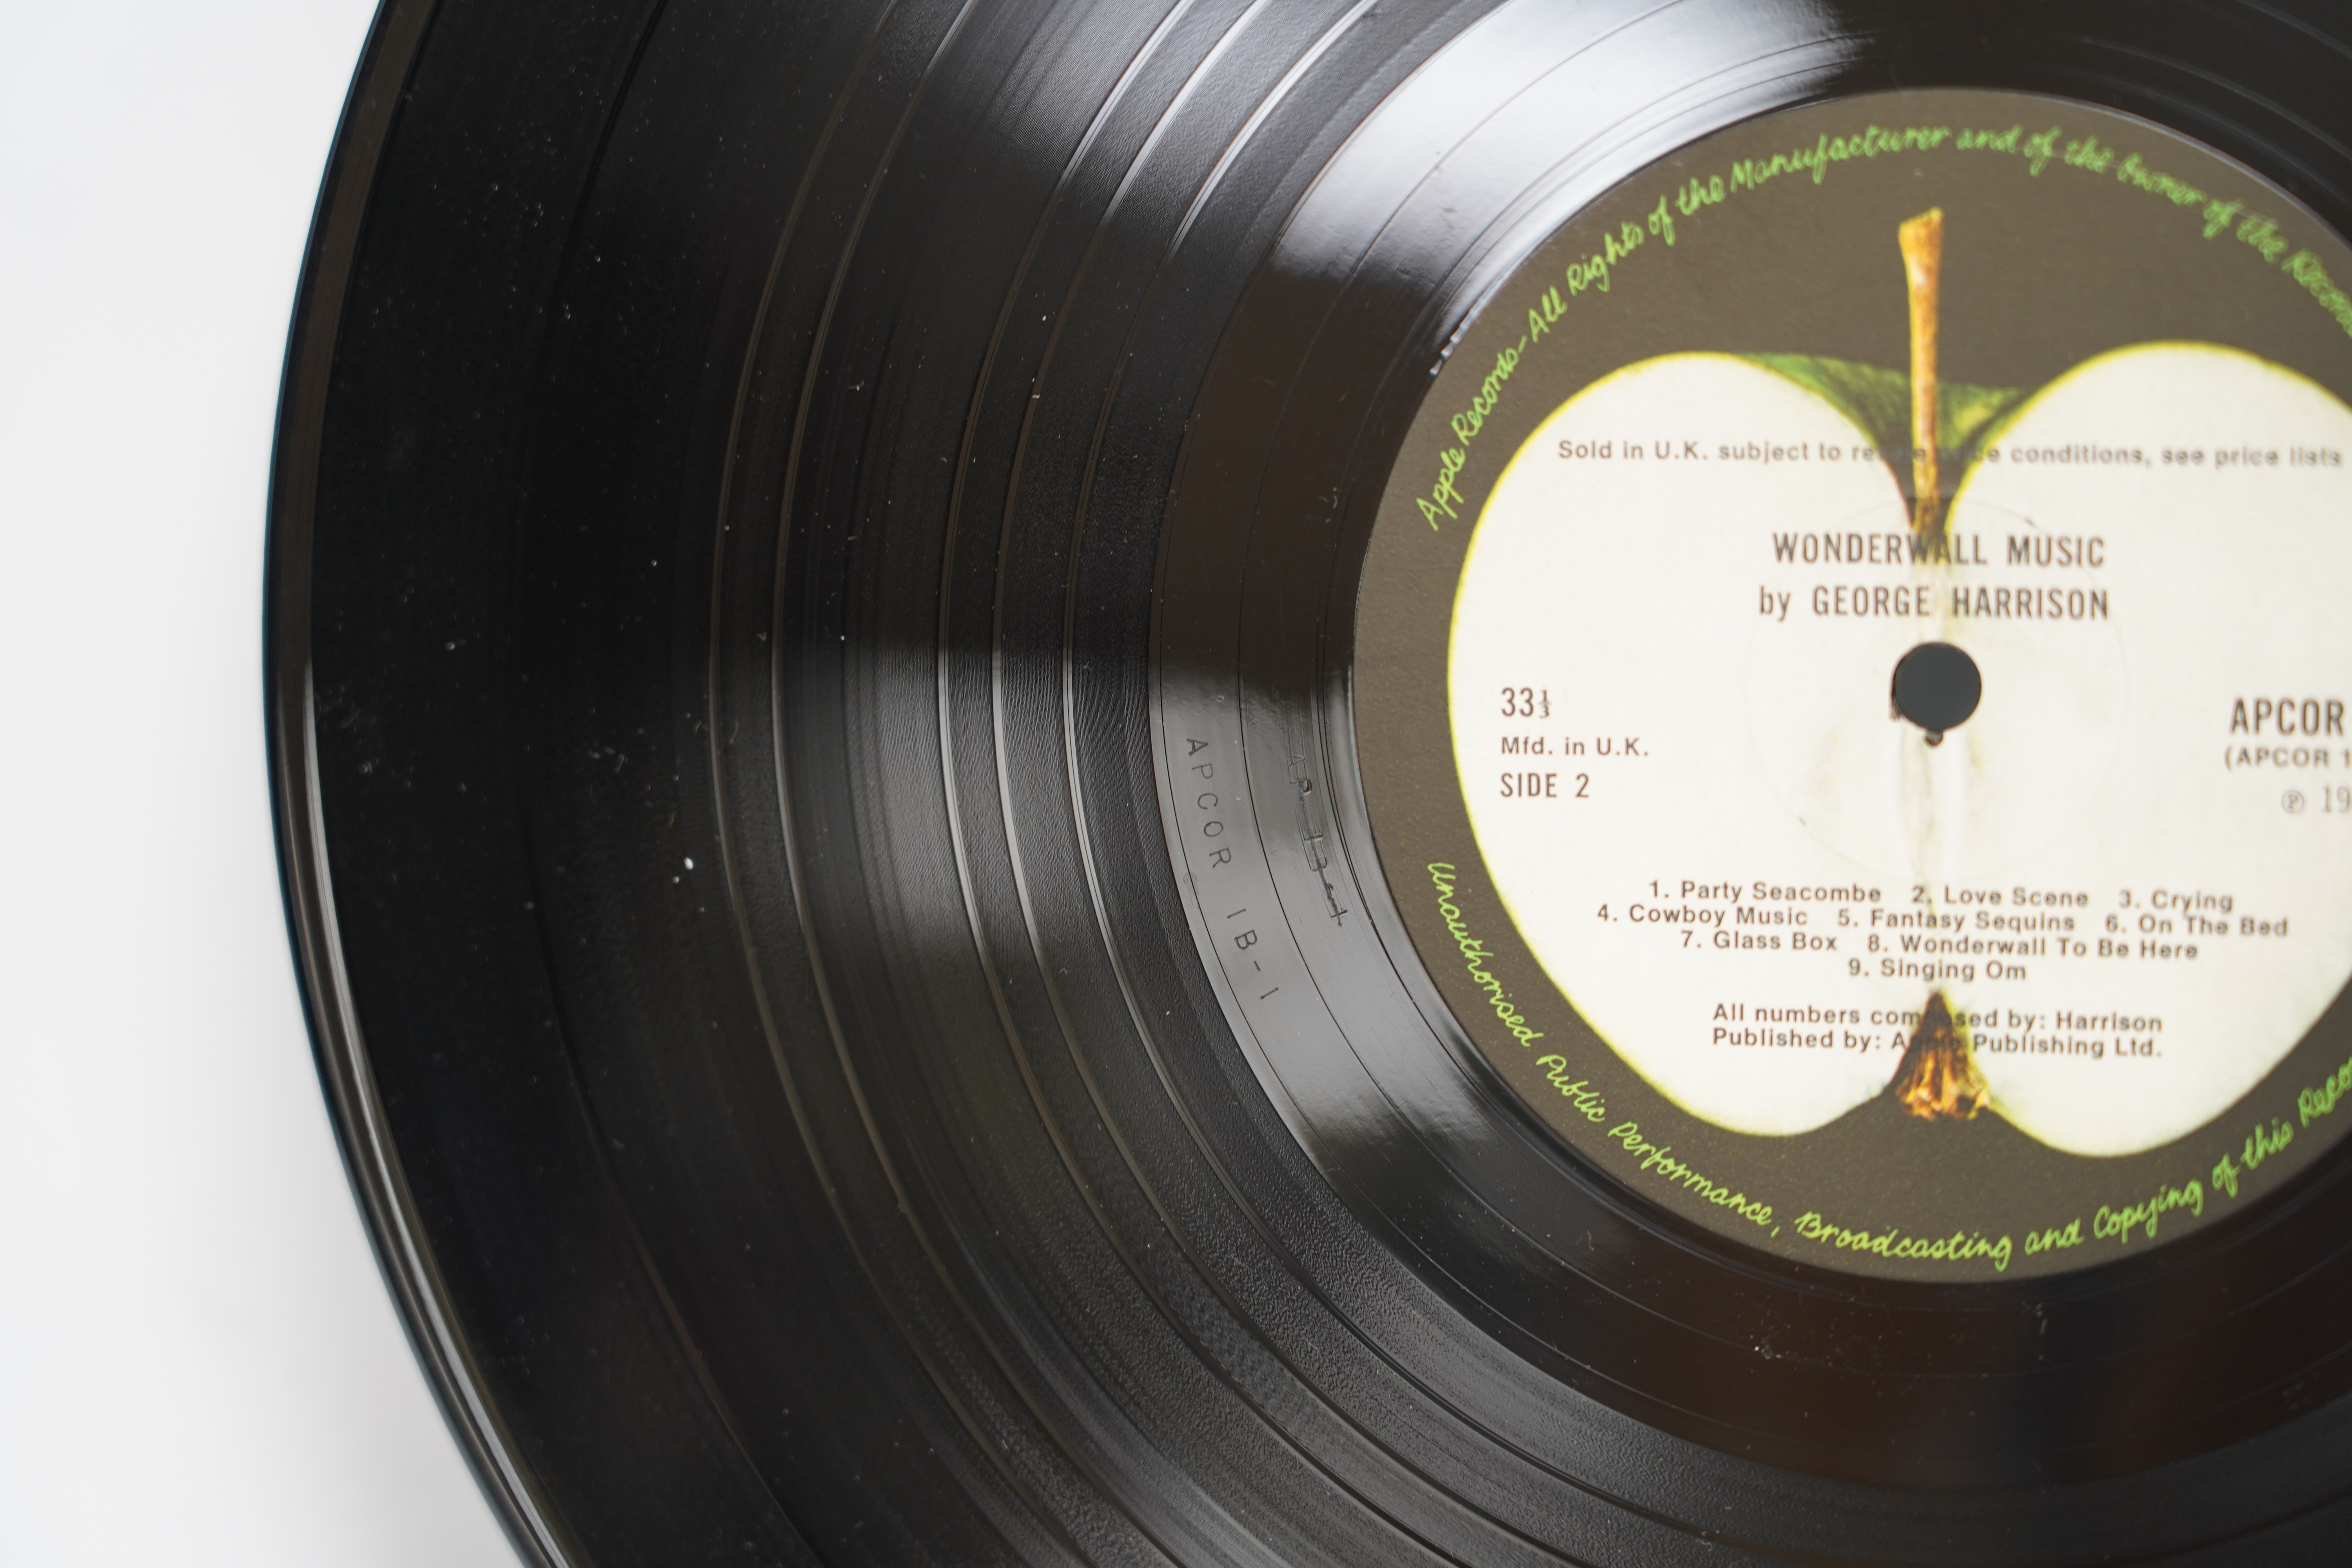 George Harrison; Wonderwall Music on Apple label APCOR1, with insert sheet (missing inner sleeve)